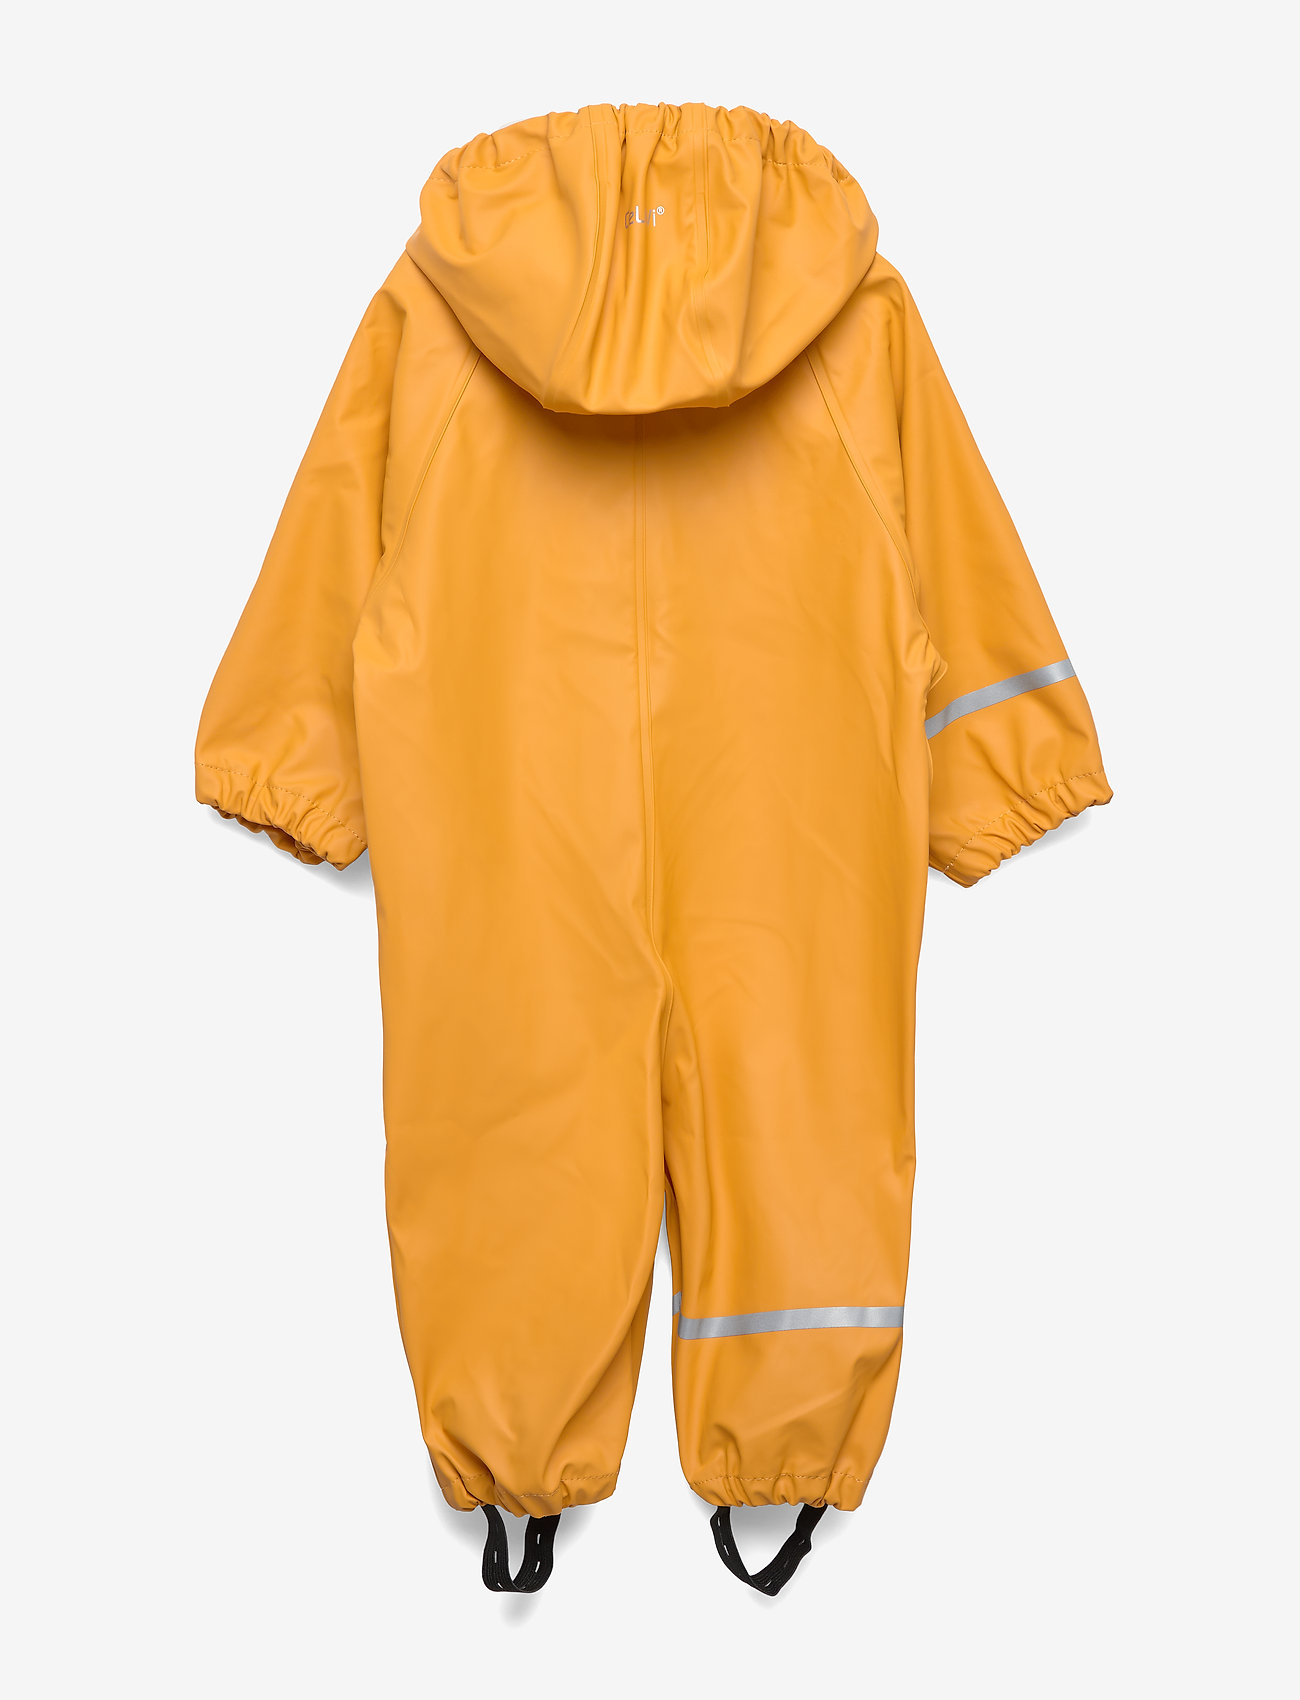 CeLaVi - Rainwear suit -Solid PU - lietus valkā kombinezoni - mineral yellow - 1